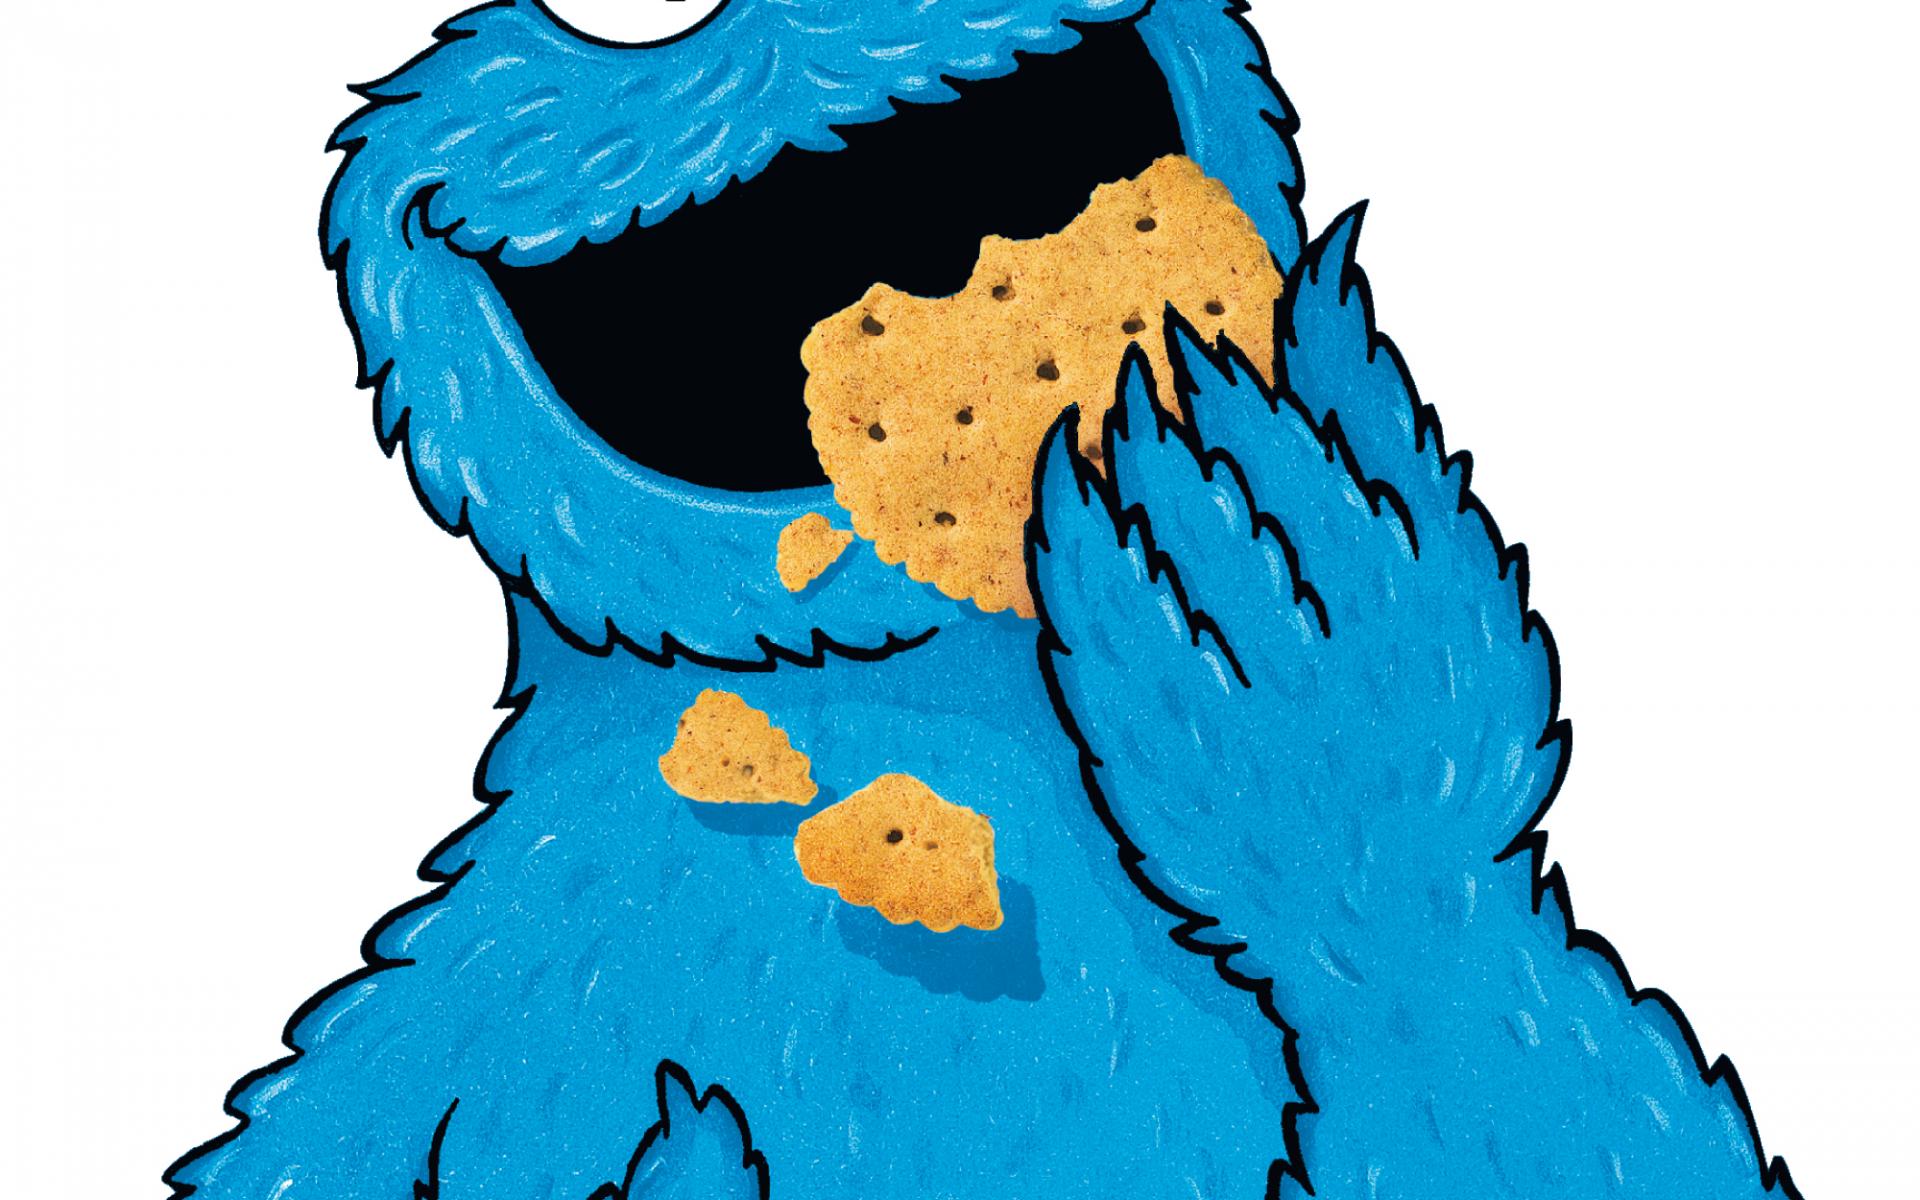 Cookie Monster Wallpapers for Desktop - WallpaperSafari